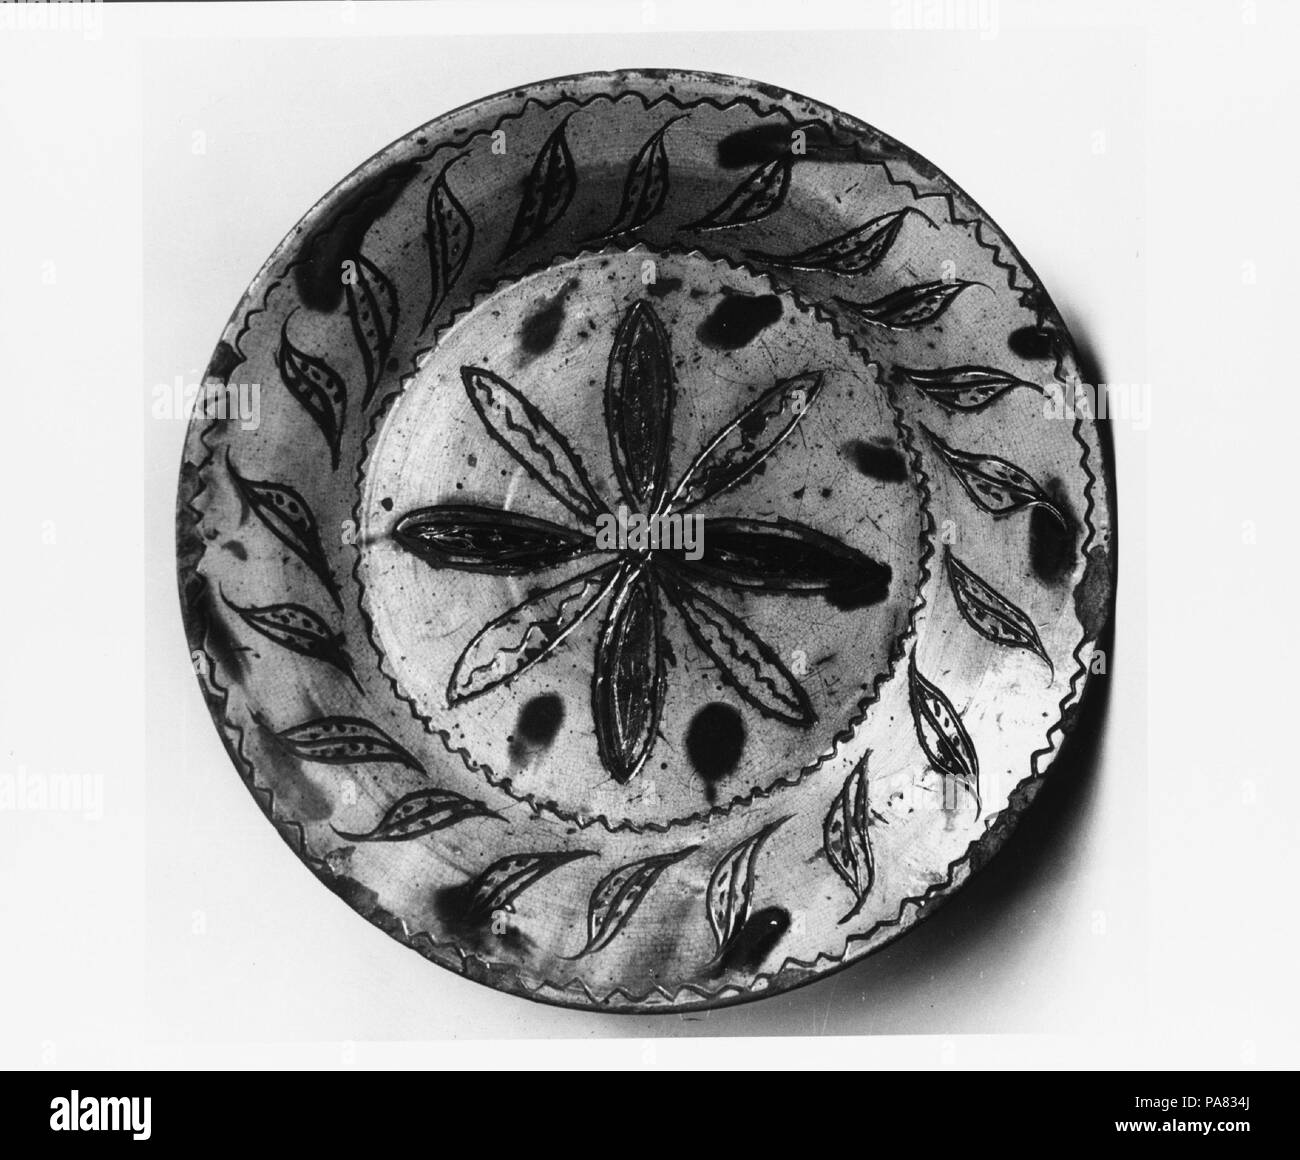 Plate. Culture: American. Dimensions: Diam. 11 1/2 in. (29.2 cm). Date: ca. 1780-1825. Museum: Metropolitan Museum of Art, New York, USA. Stock Photo